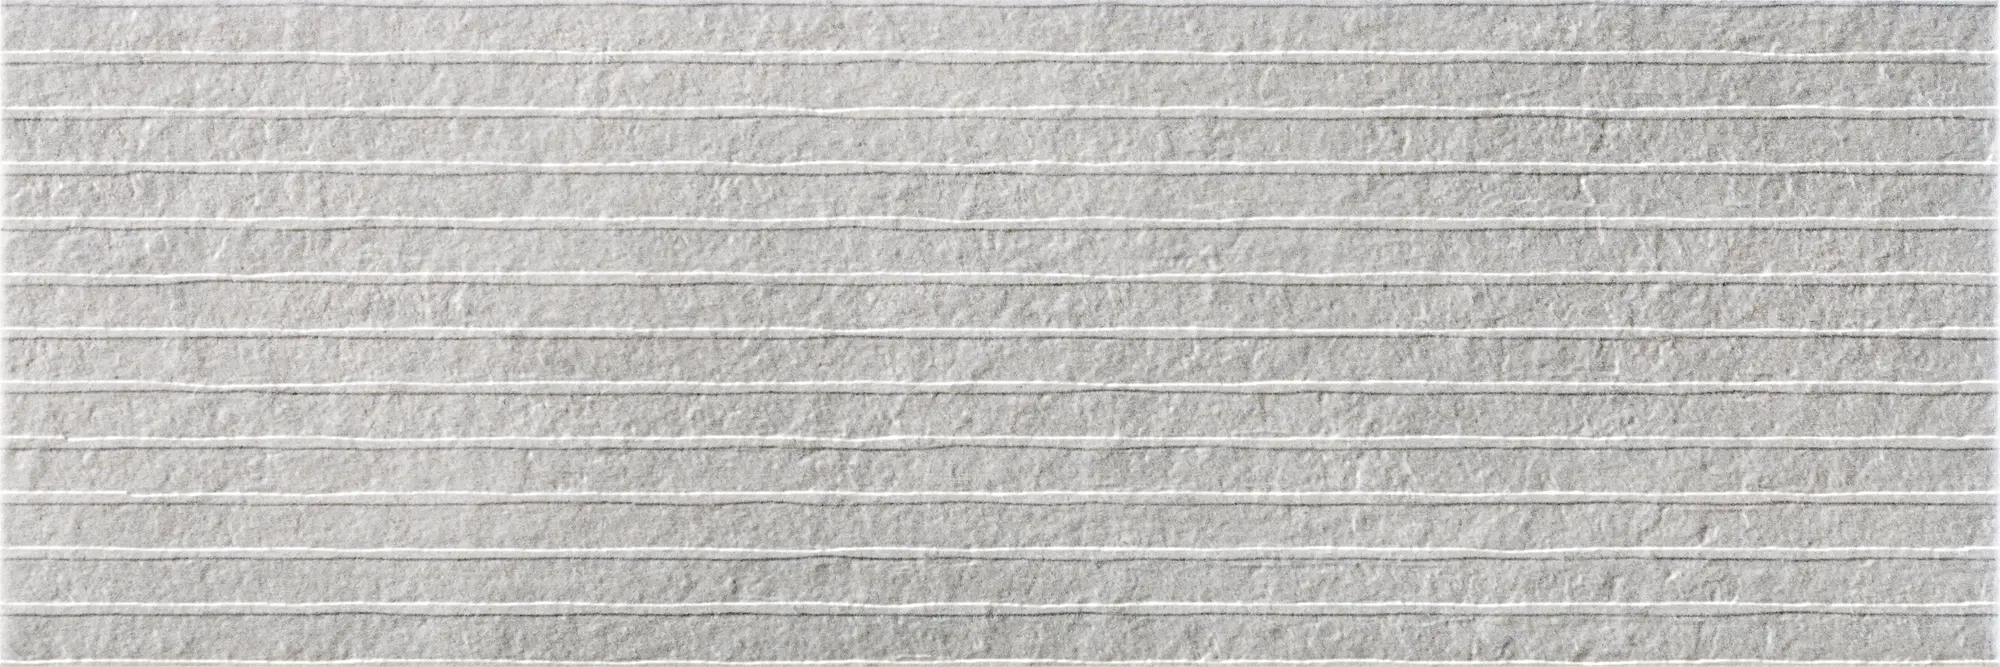 Azulejo cerámico caen efecto relieve, cemento buron-gris 20x60 cm